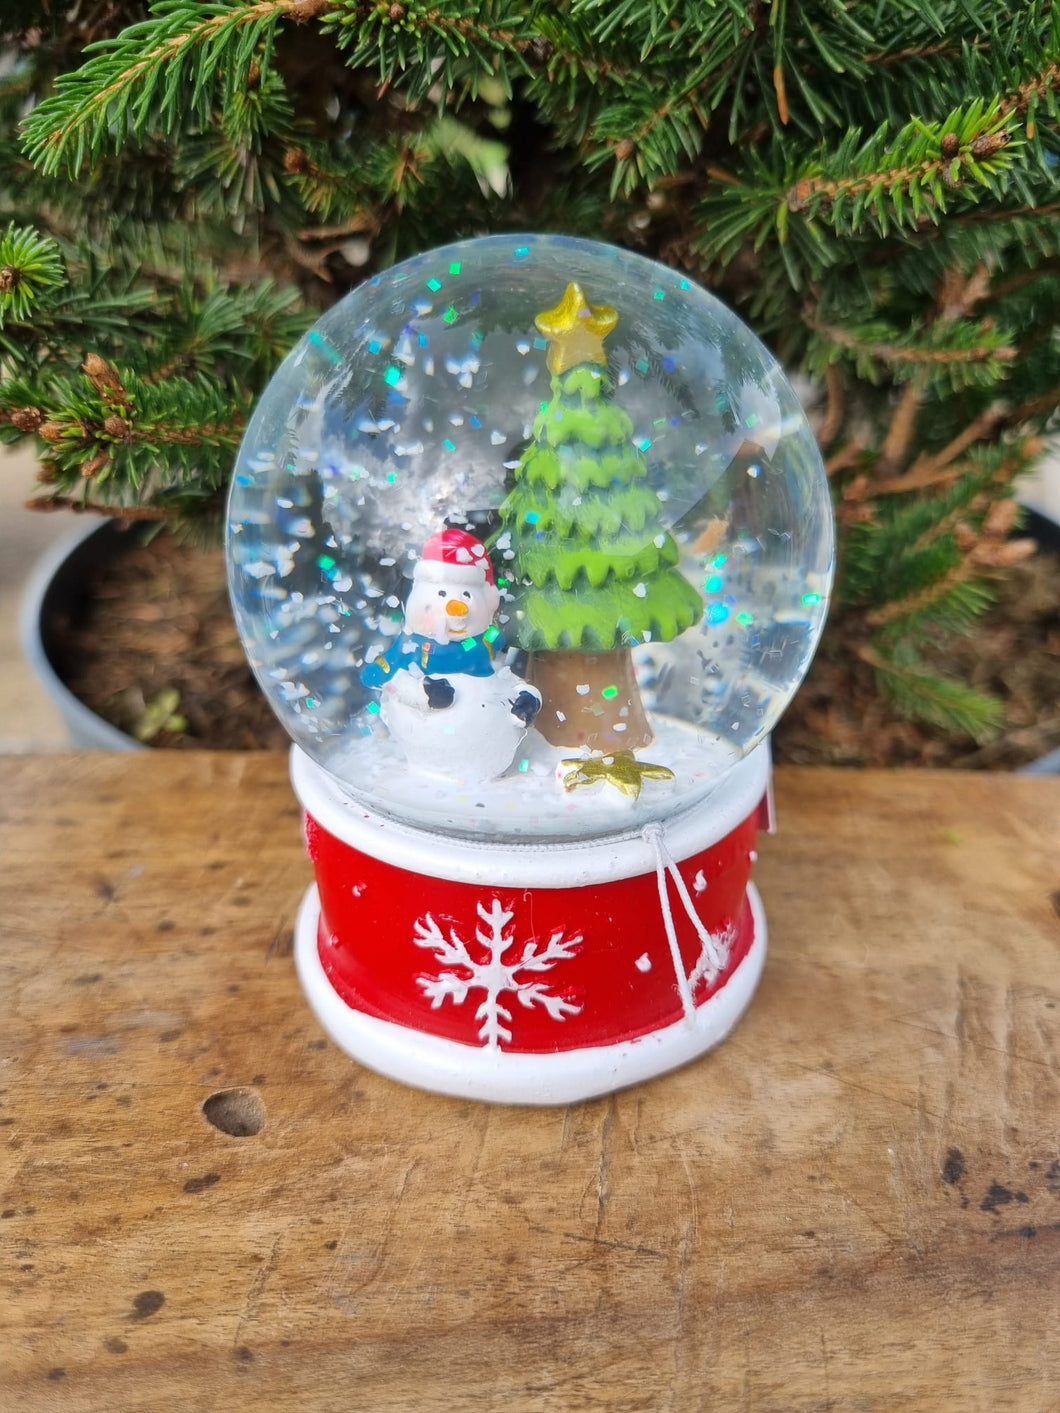 Snowman/Santa Christmas LED light up snow globe decoration - Assorted 2 designs